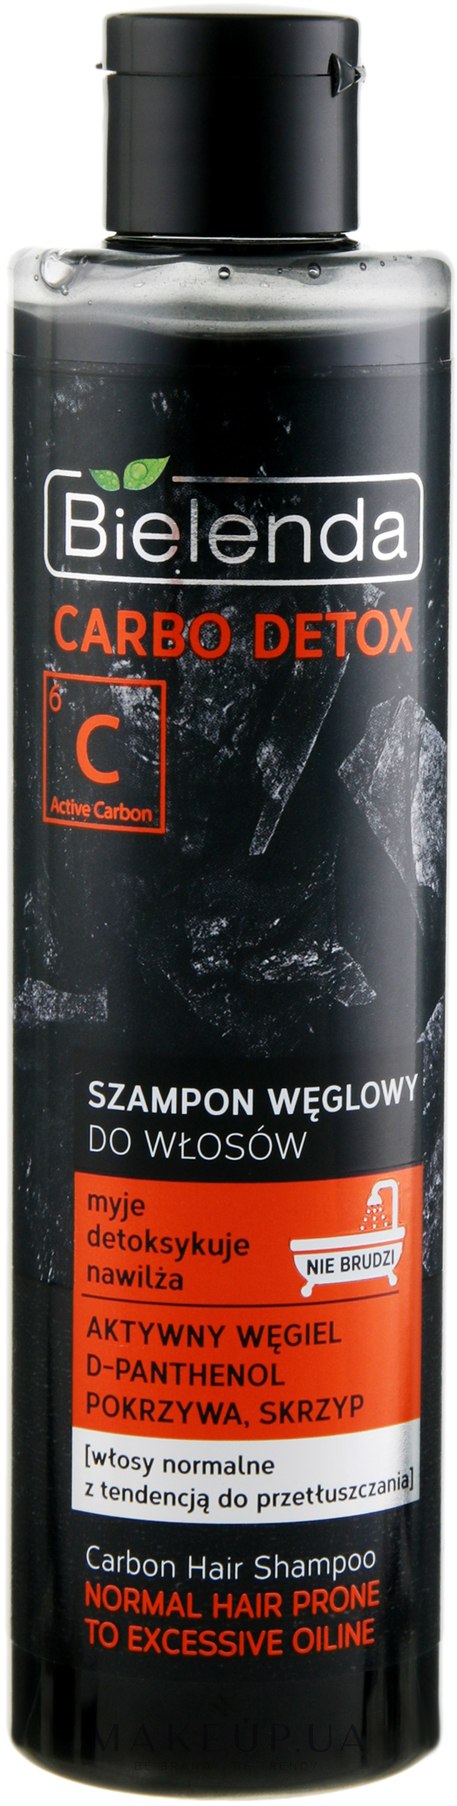 carbo detox szampon